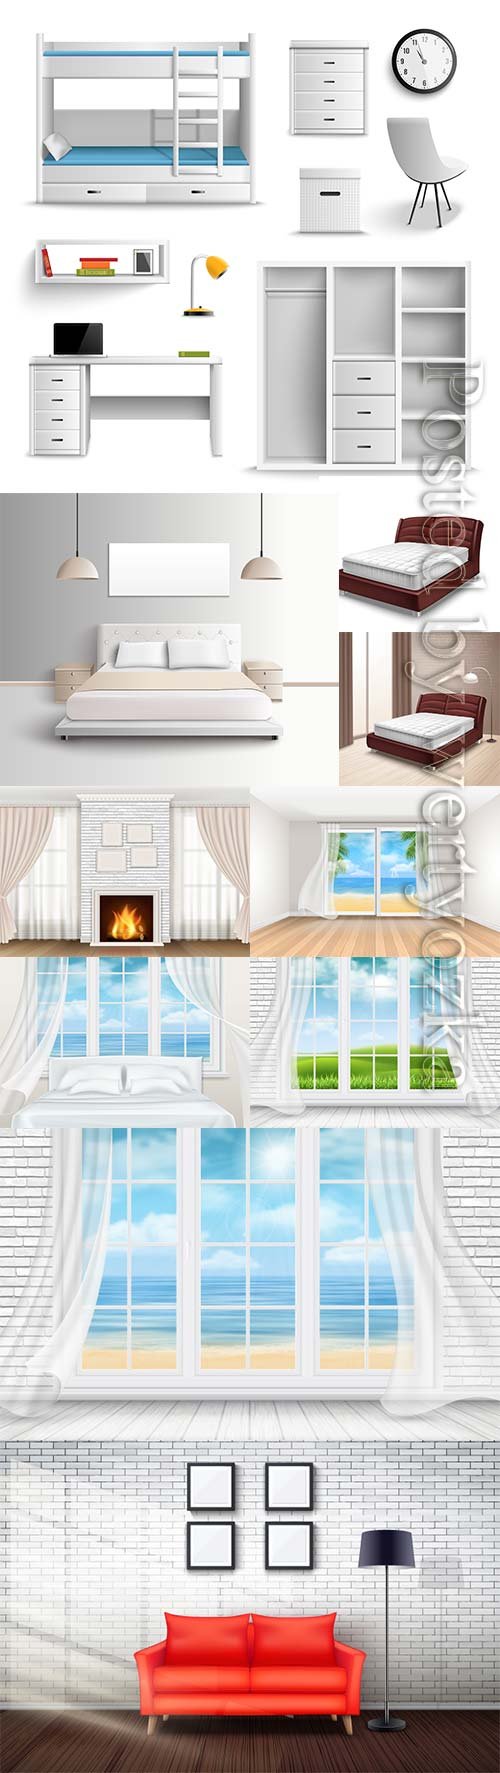 Interior of rooms, windows vector illustration